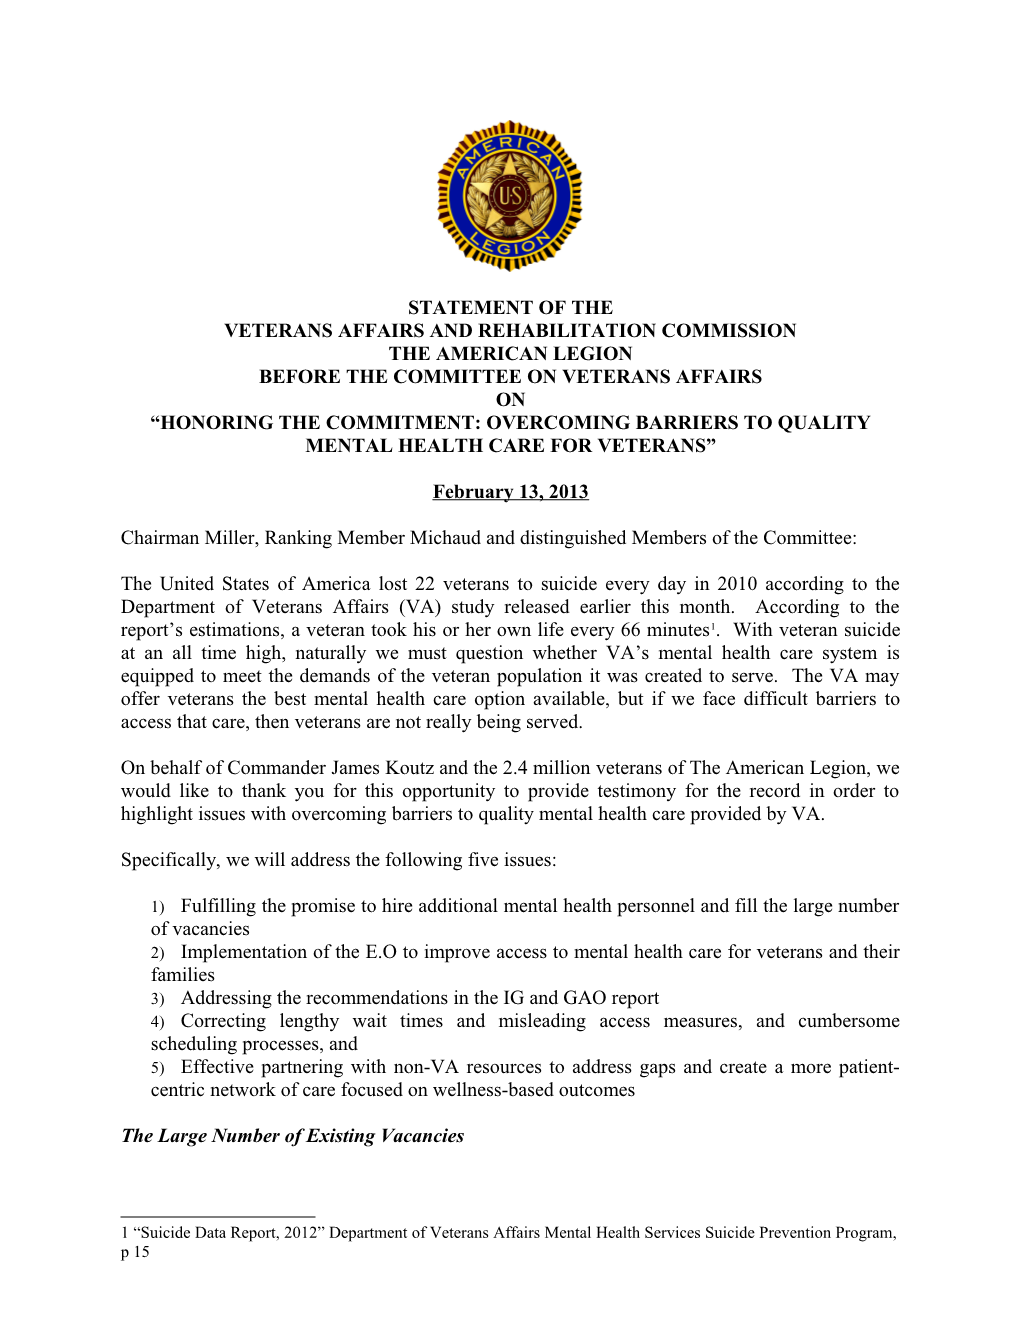 Veterans Affairs and Rehabilitation Commission